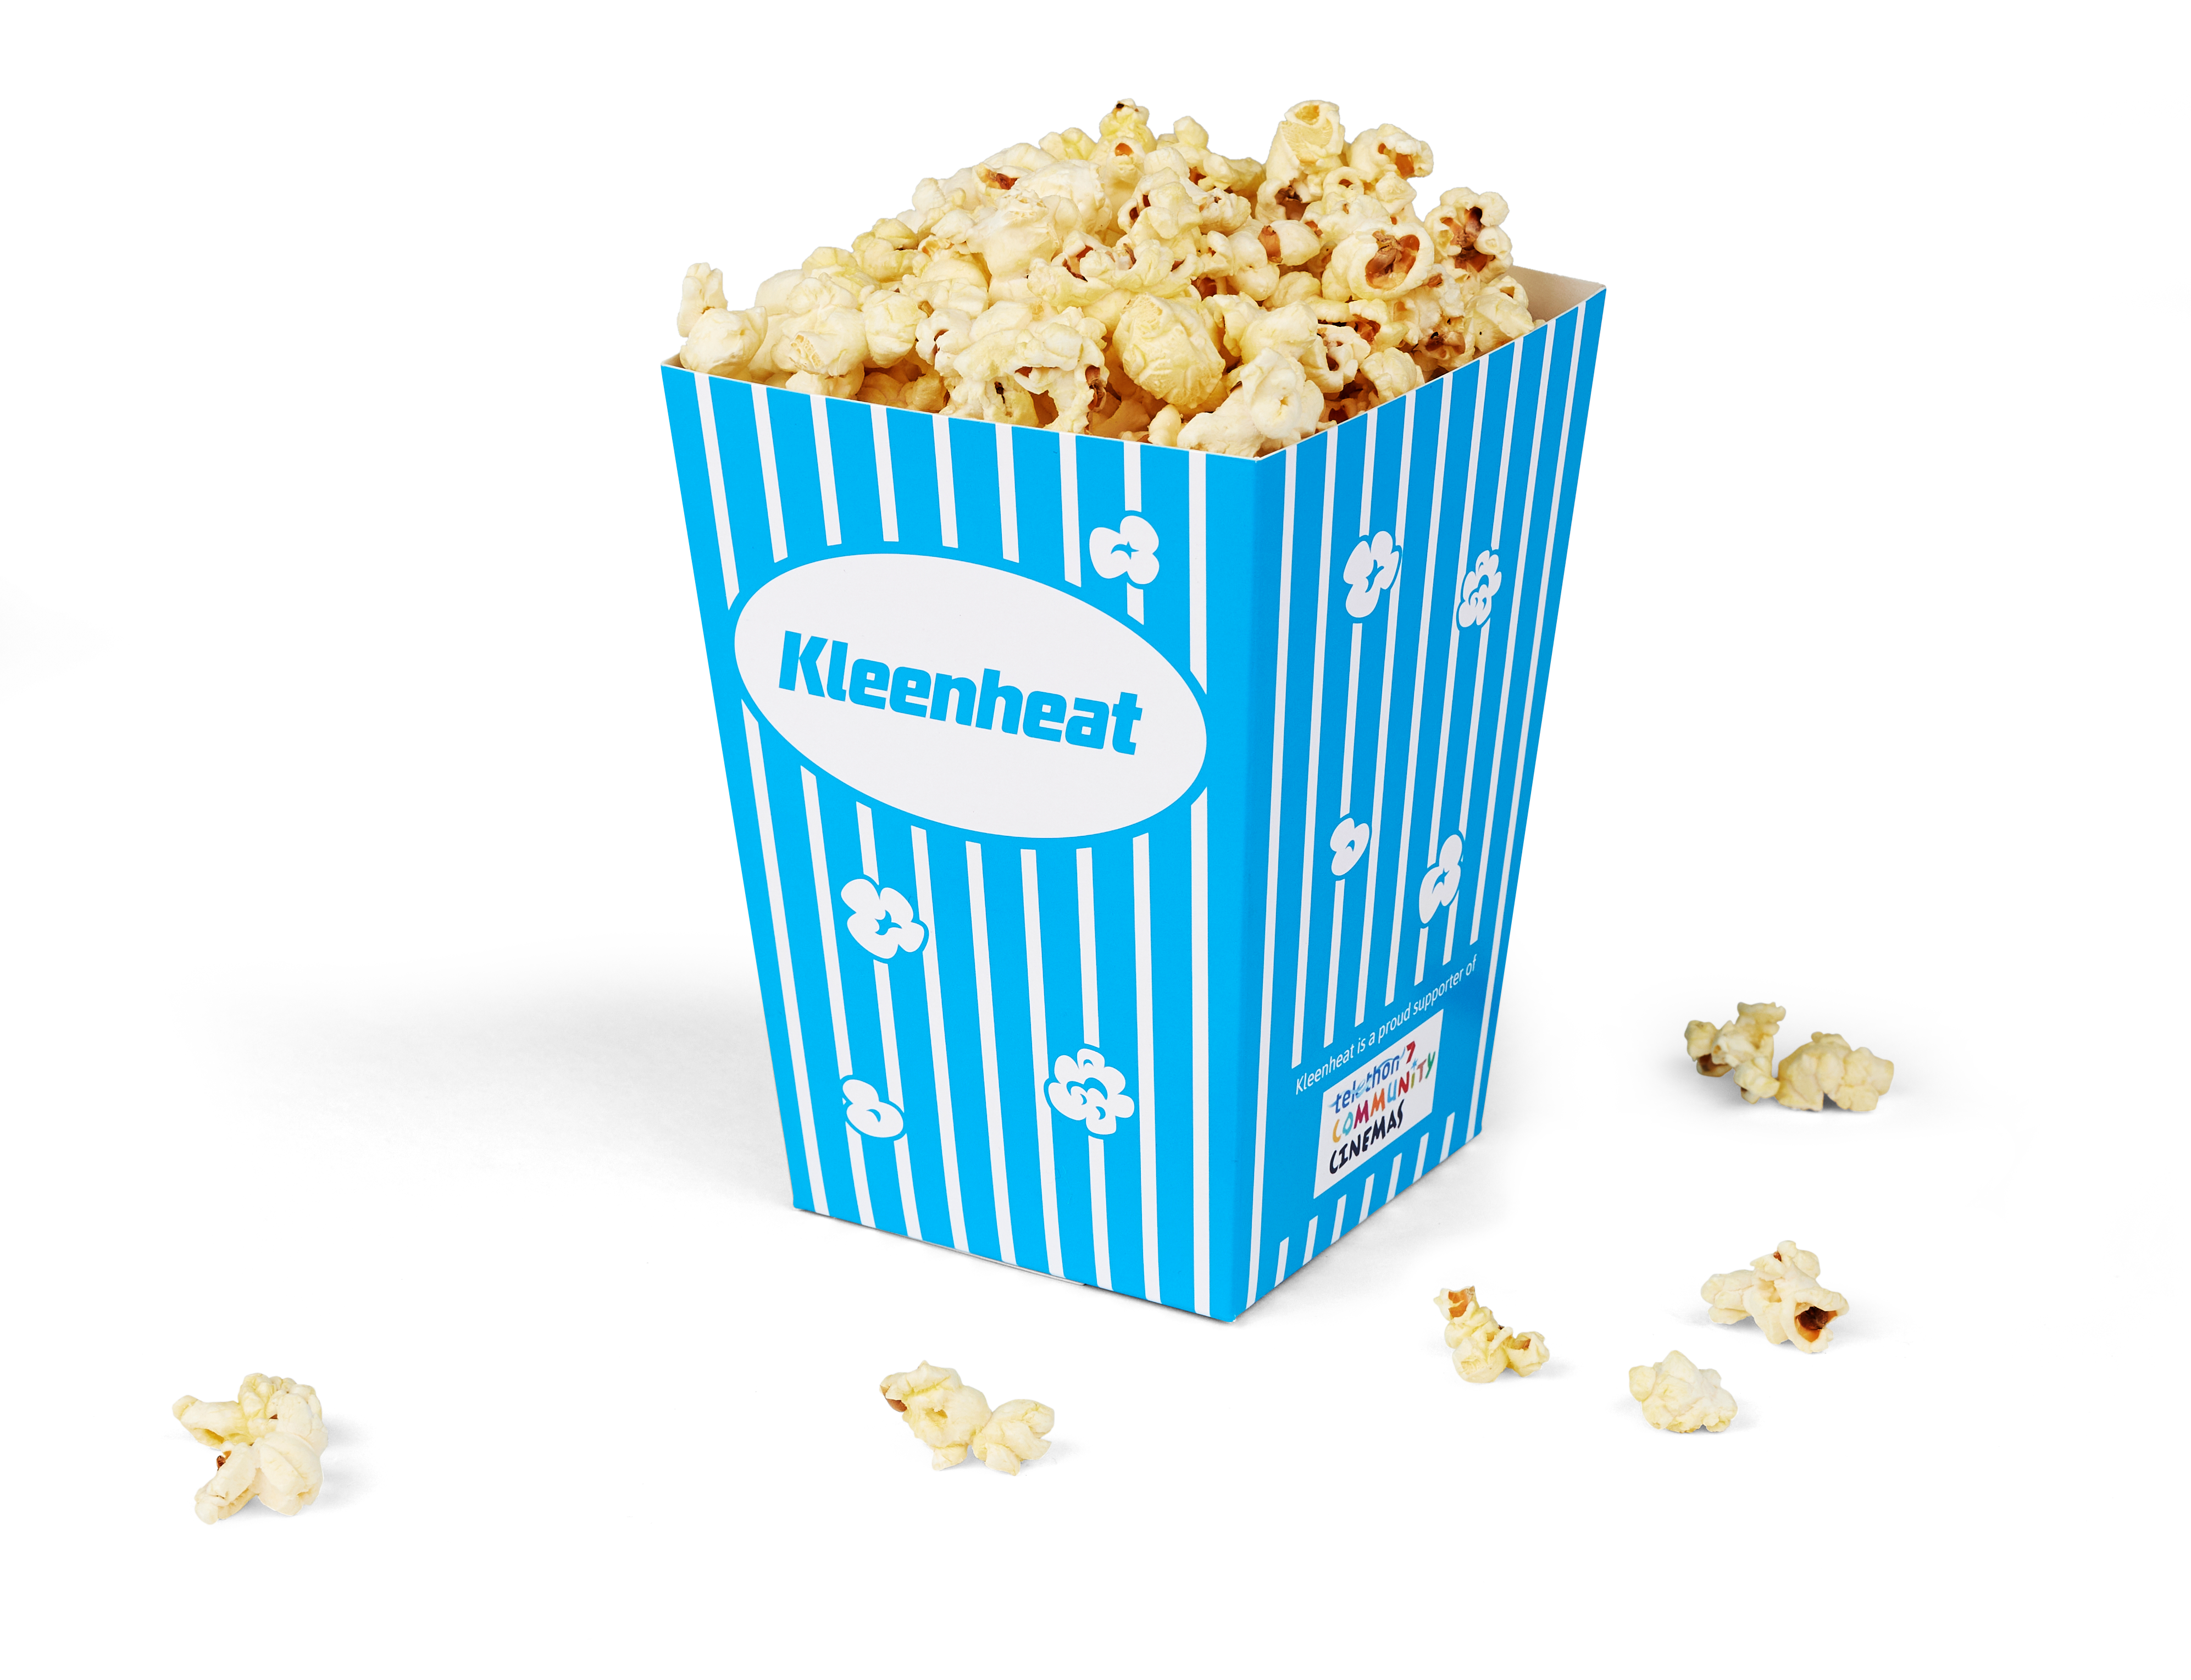 Kleenheat Popcorn